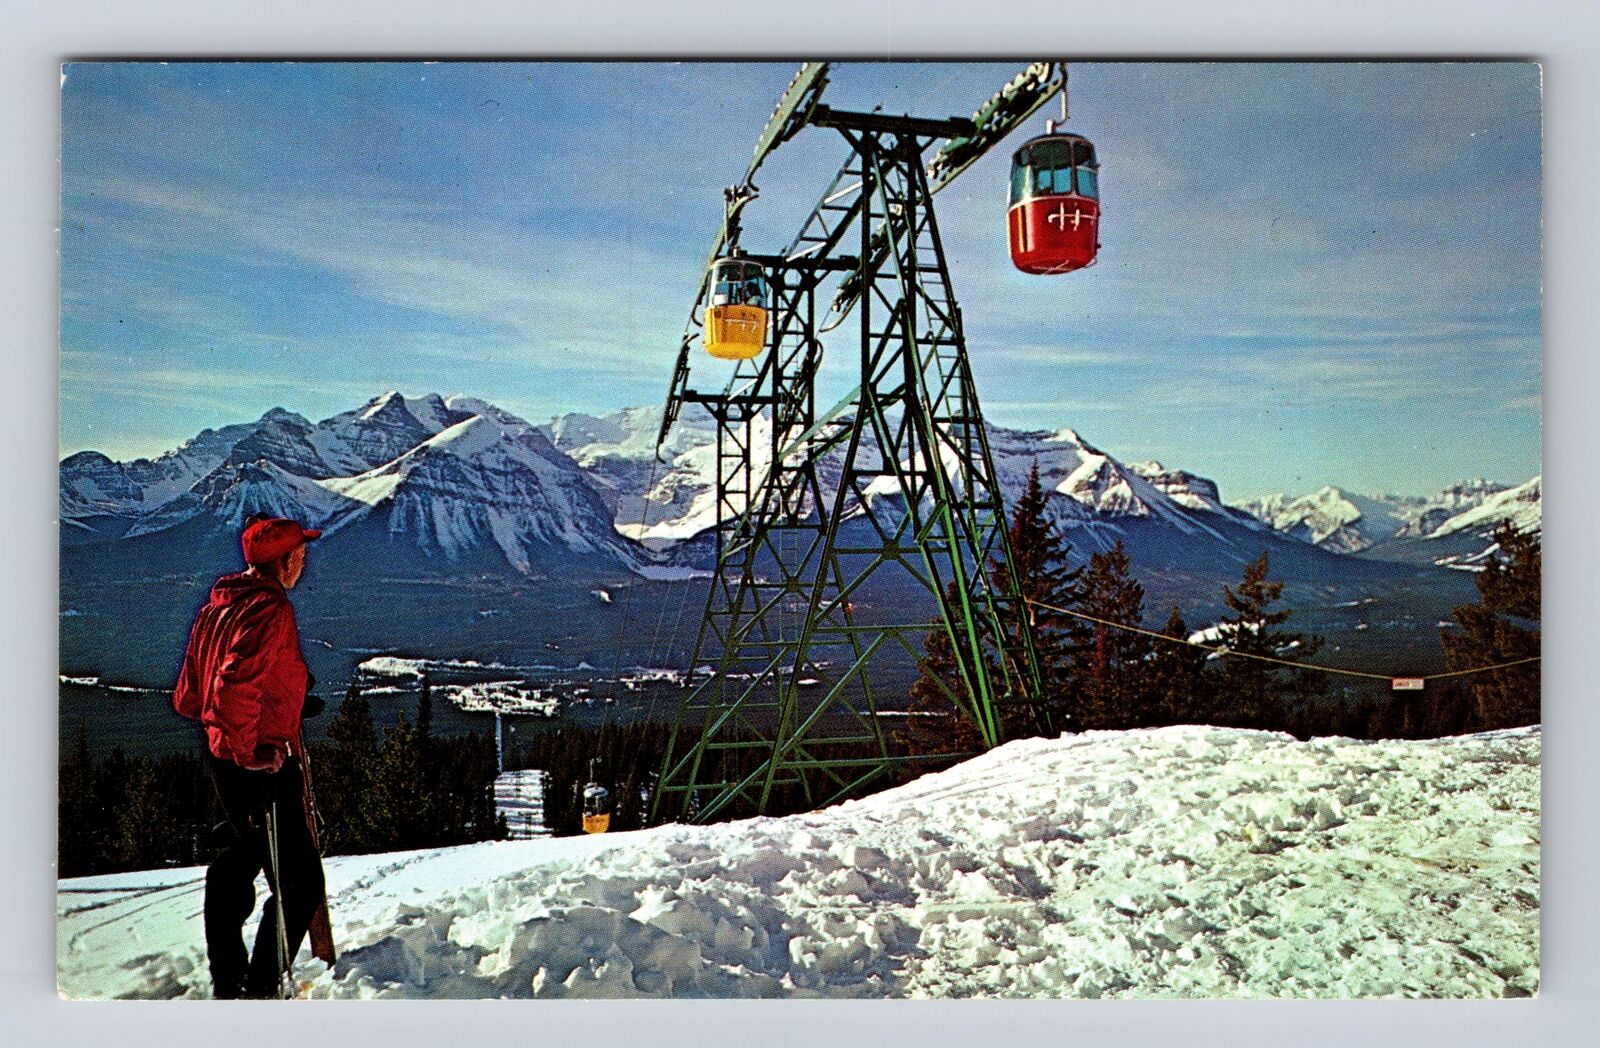 Lake Louise Alberta-Canada, Mt Whitehorn, Sedan Lift, Vintage Souvenir Postcard